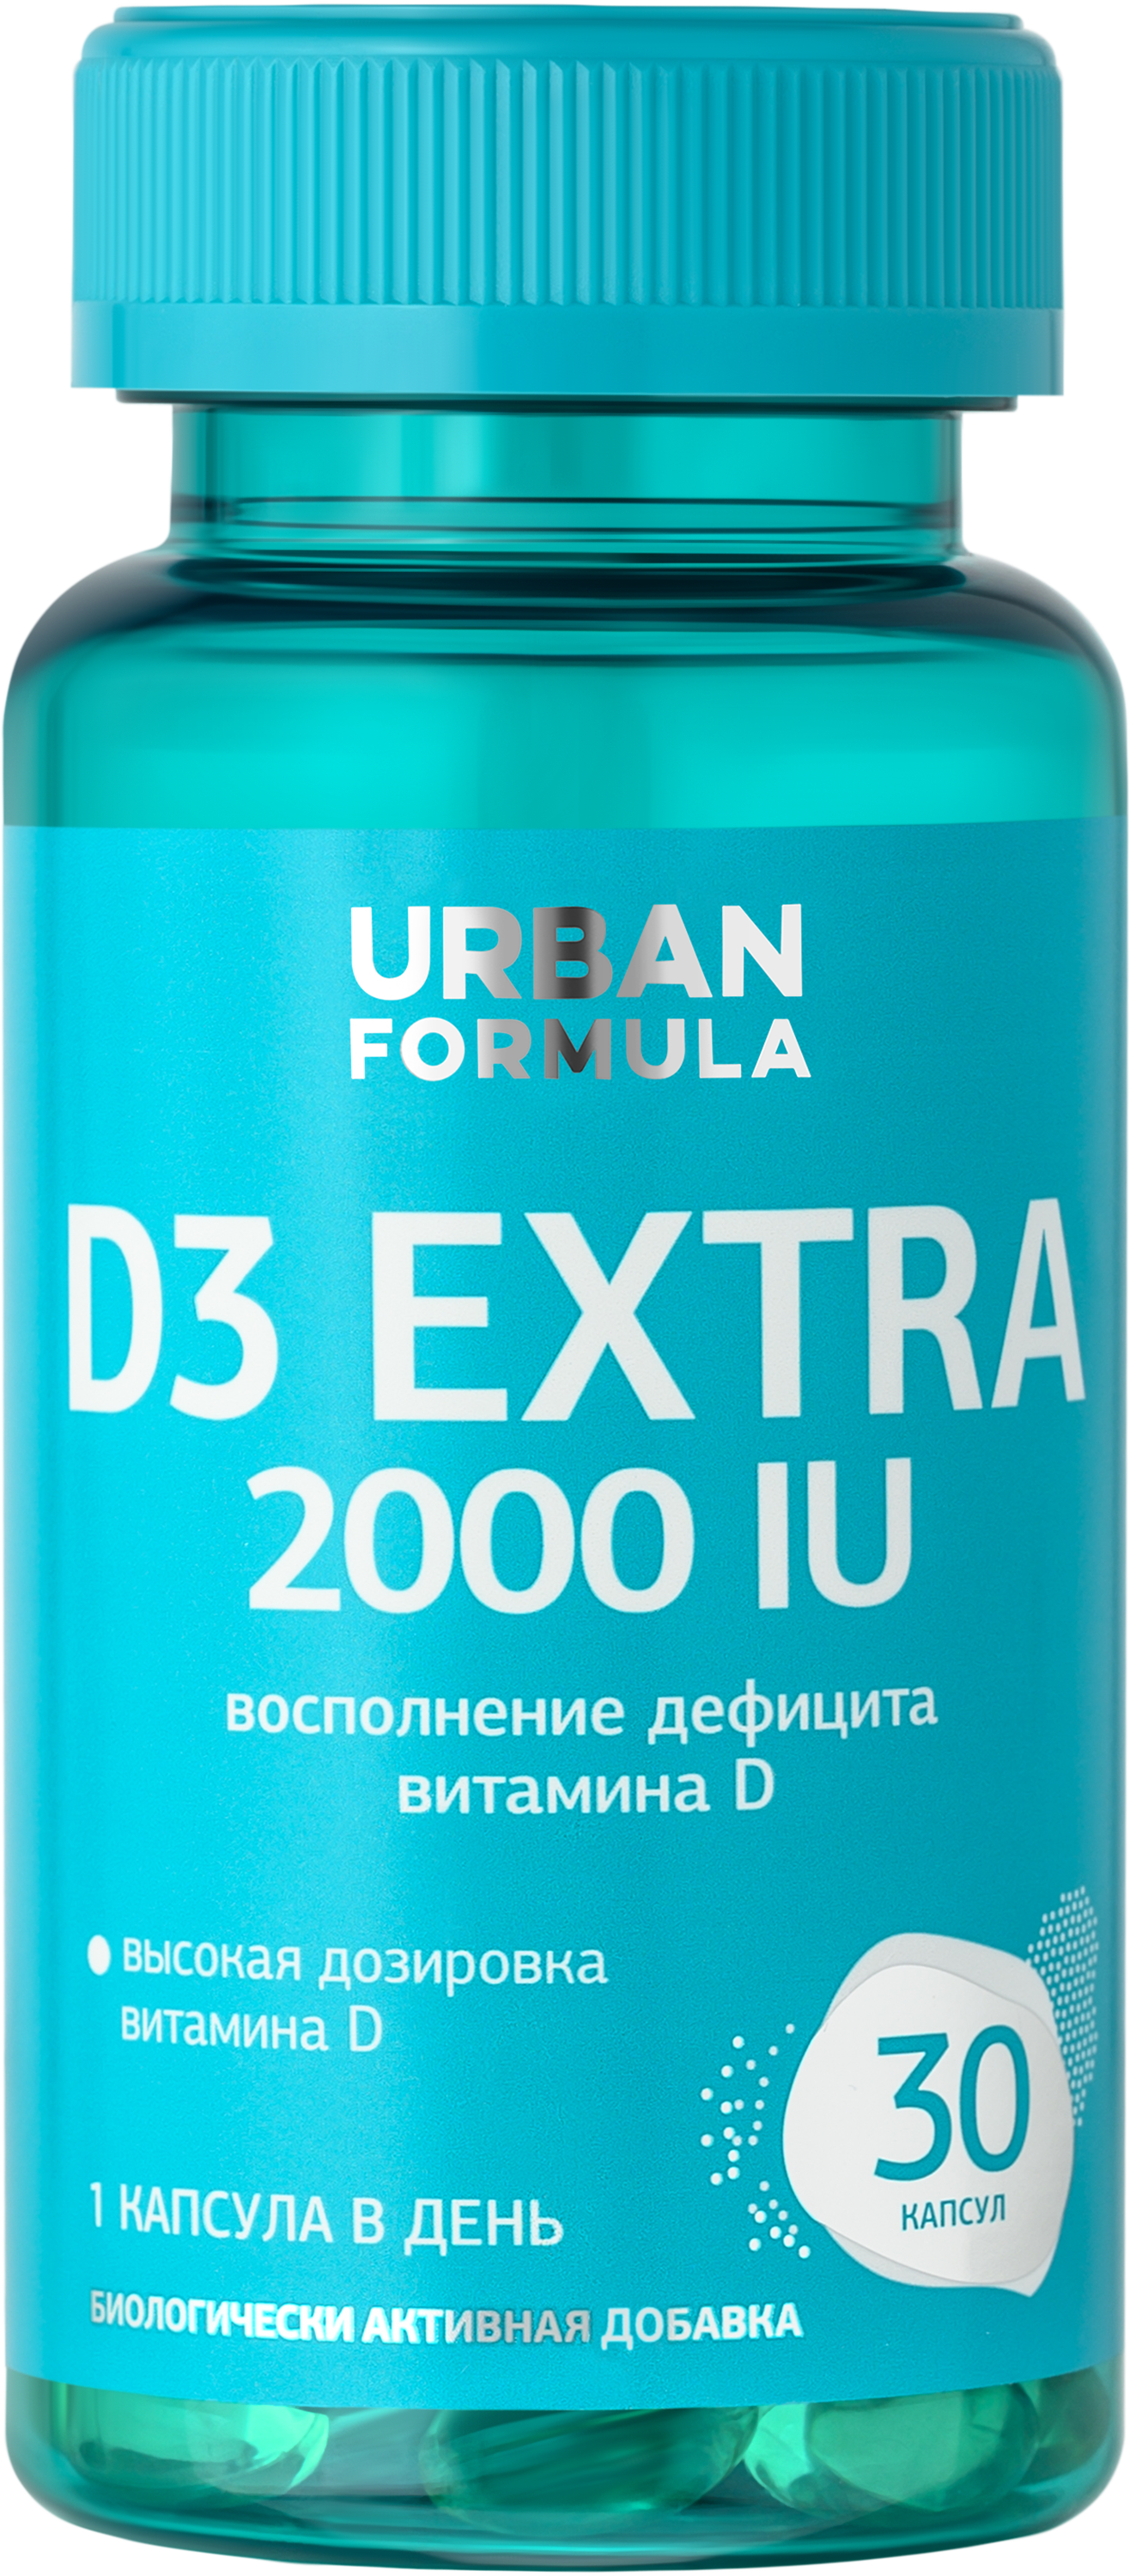 D3 Extra 2000 IU